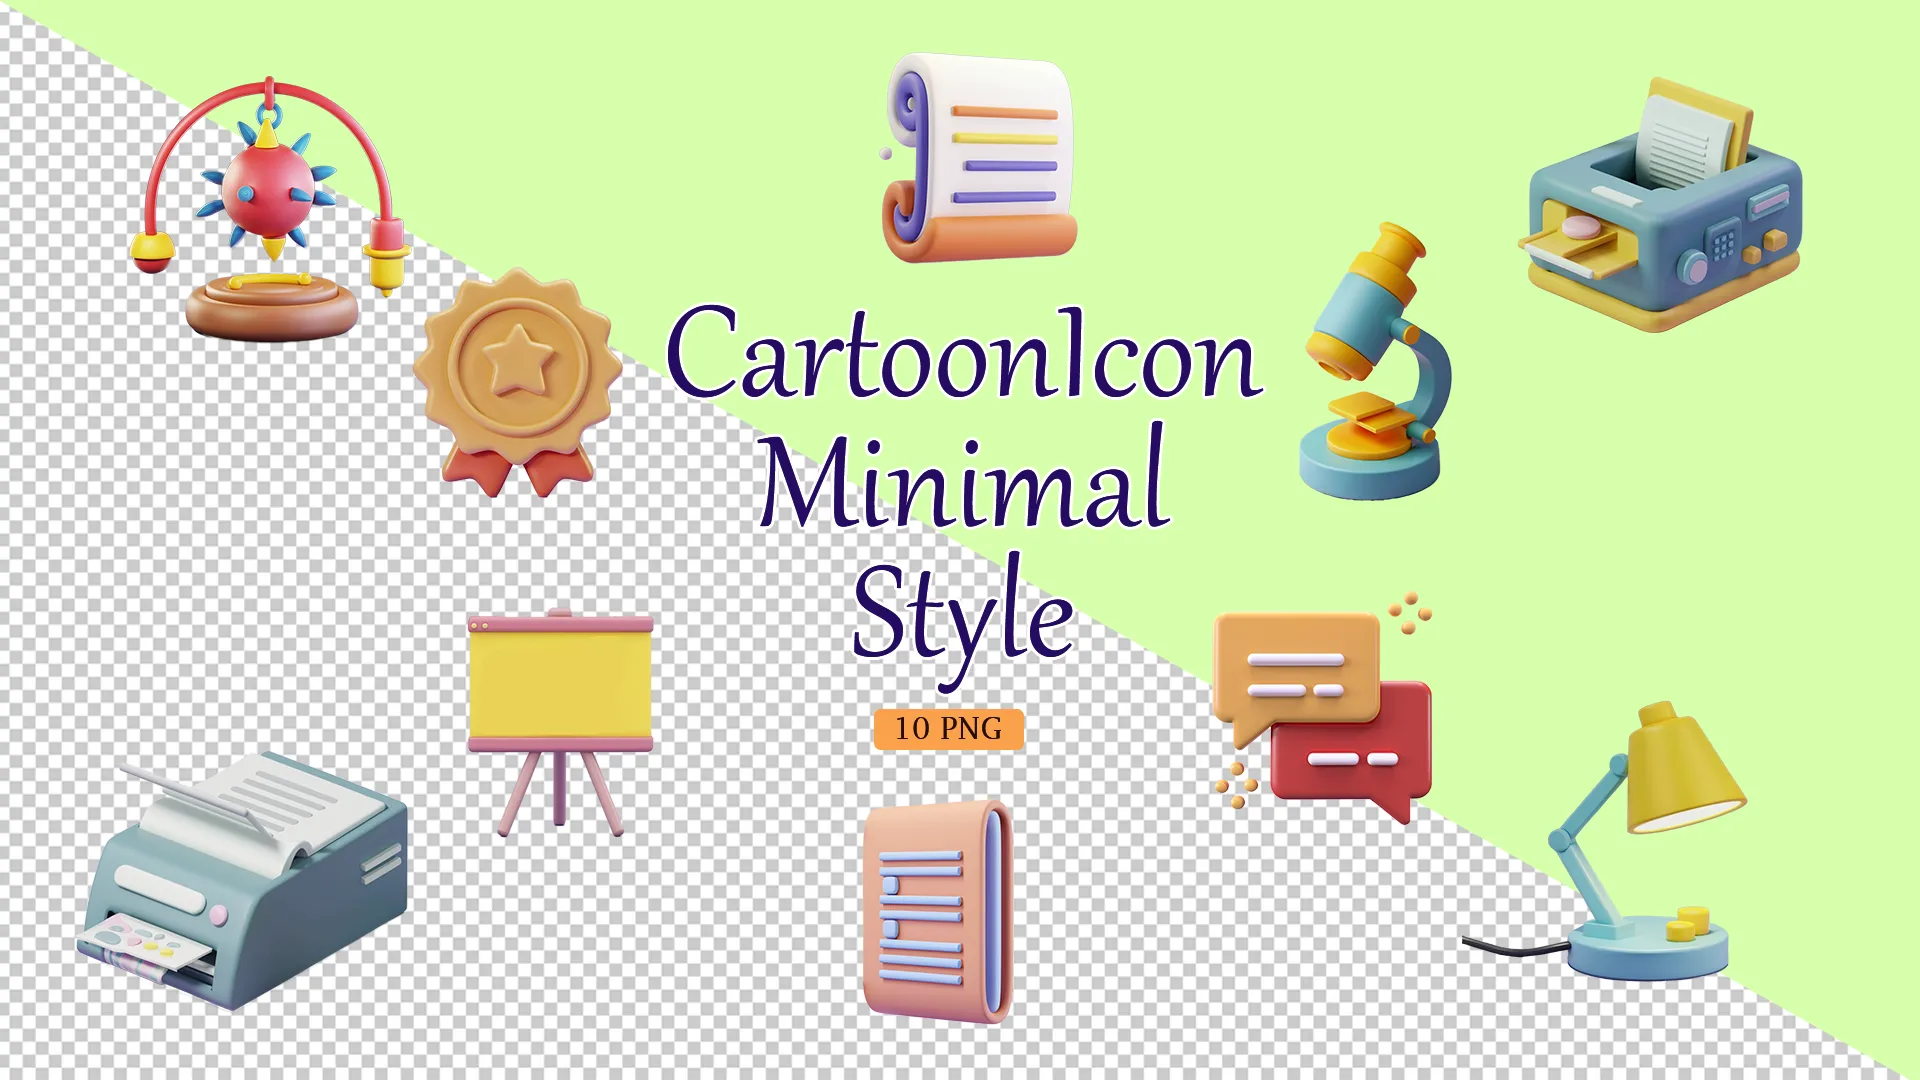 Charming 3D Cartoon Icon Set in Minimalist Style image